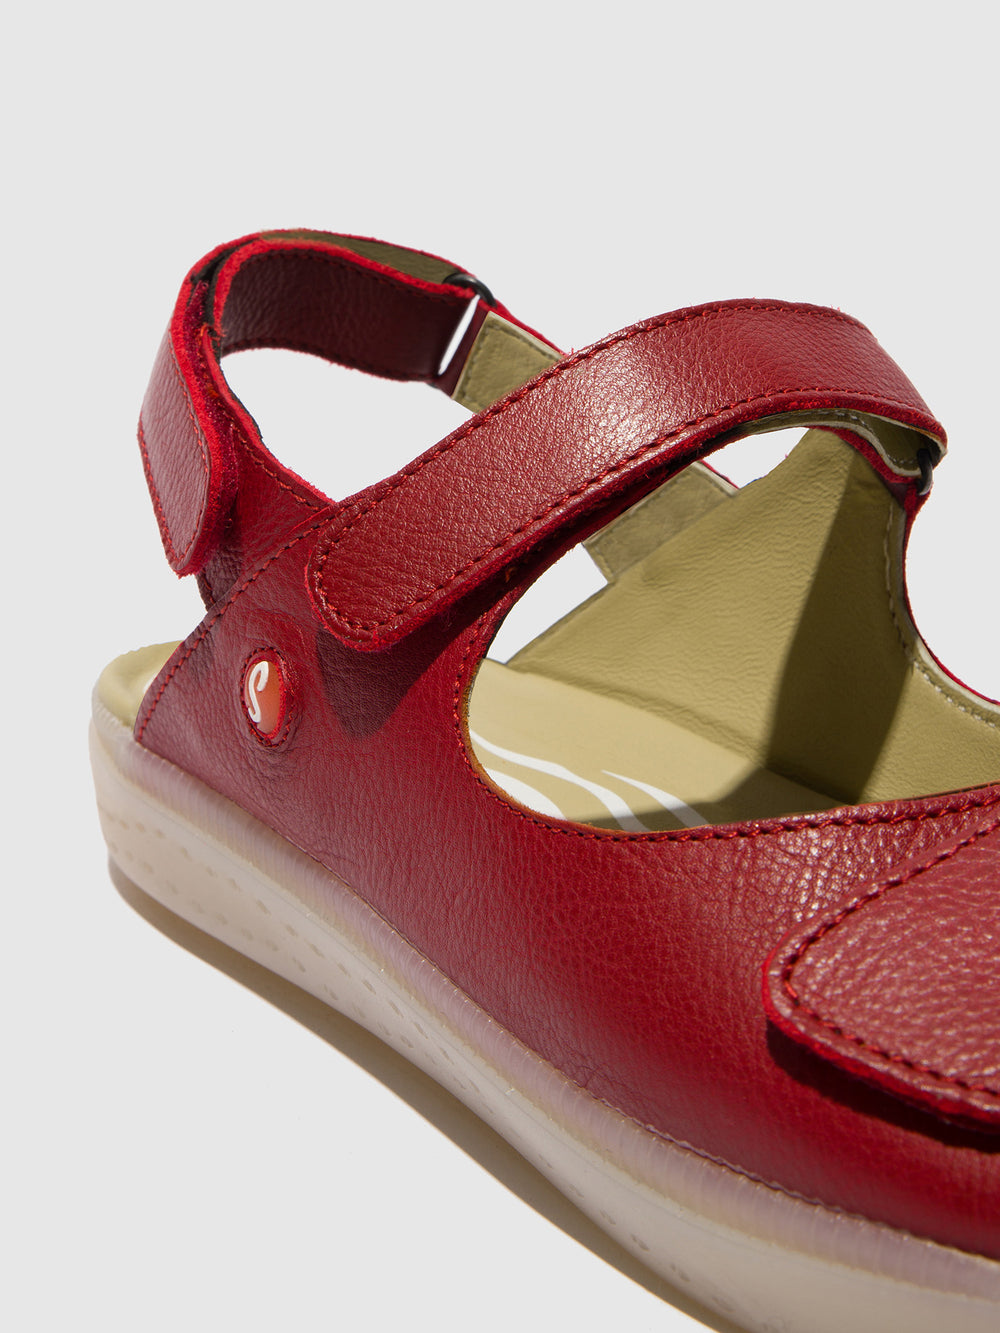 Velcro Sandals IOAH743SOF RED